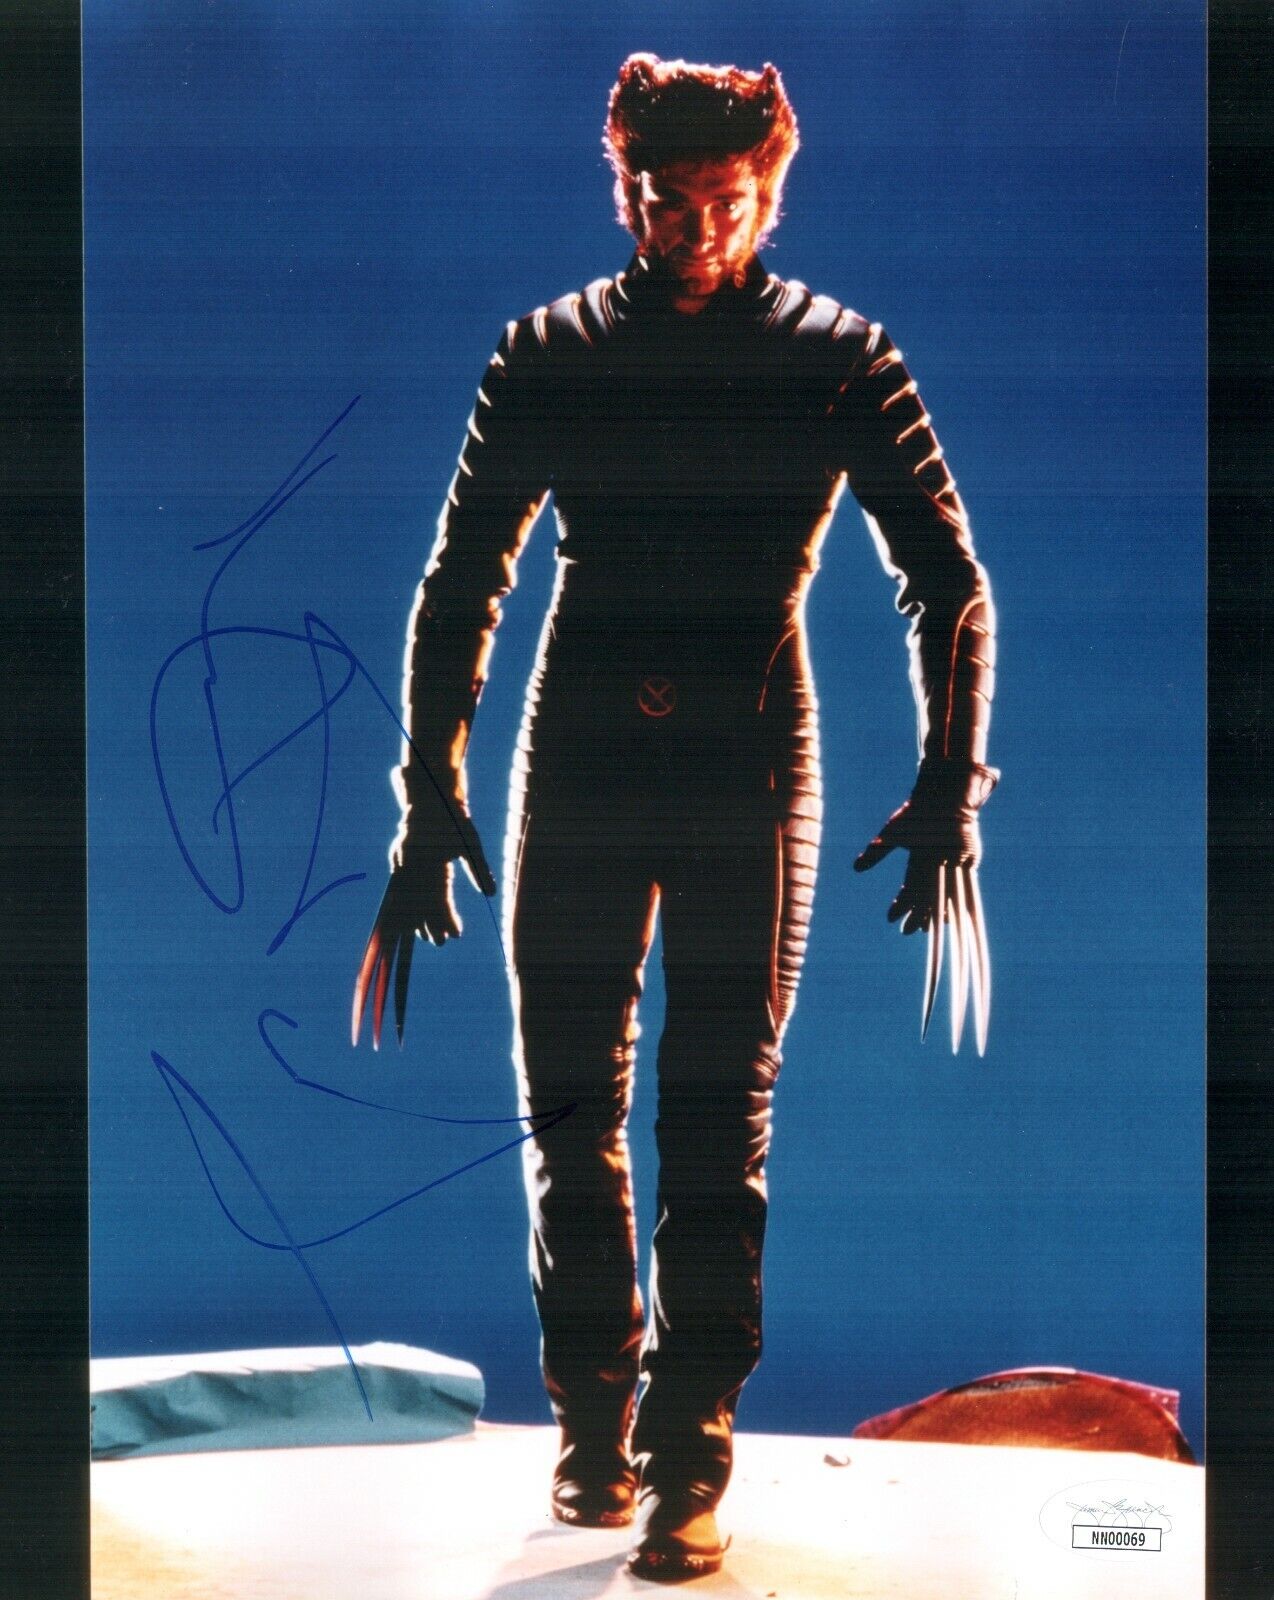 HUGH JACKMAN Signed X-MEN WOLVERINE 8x10 Photo Poster painting !Full Name Autograph! JSA COA